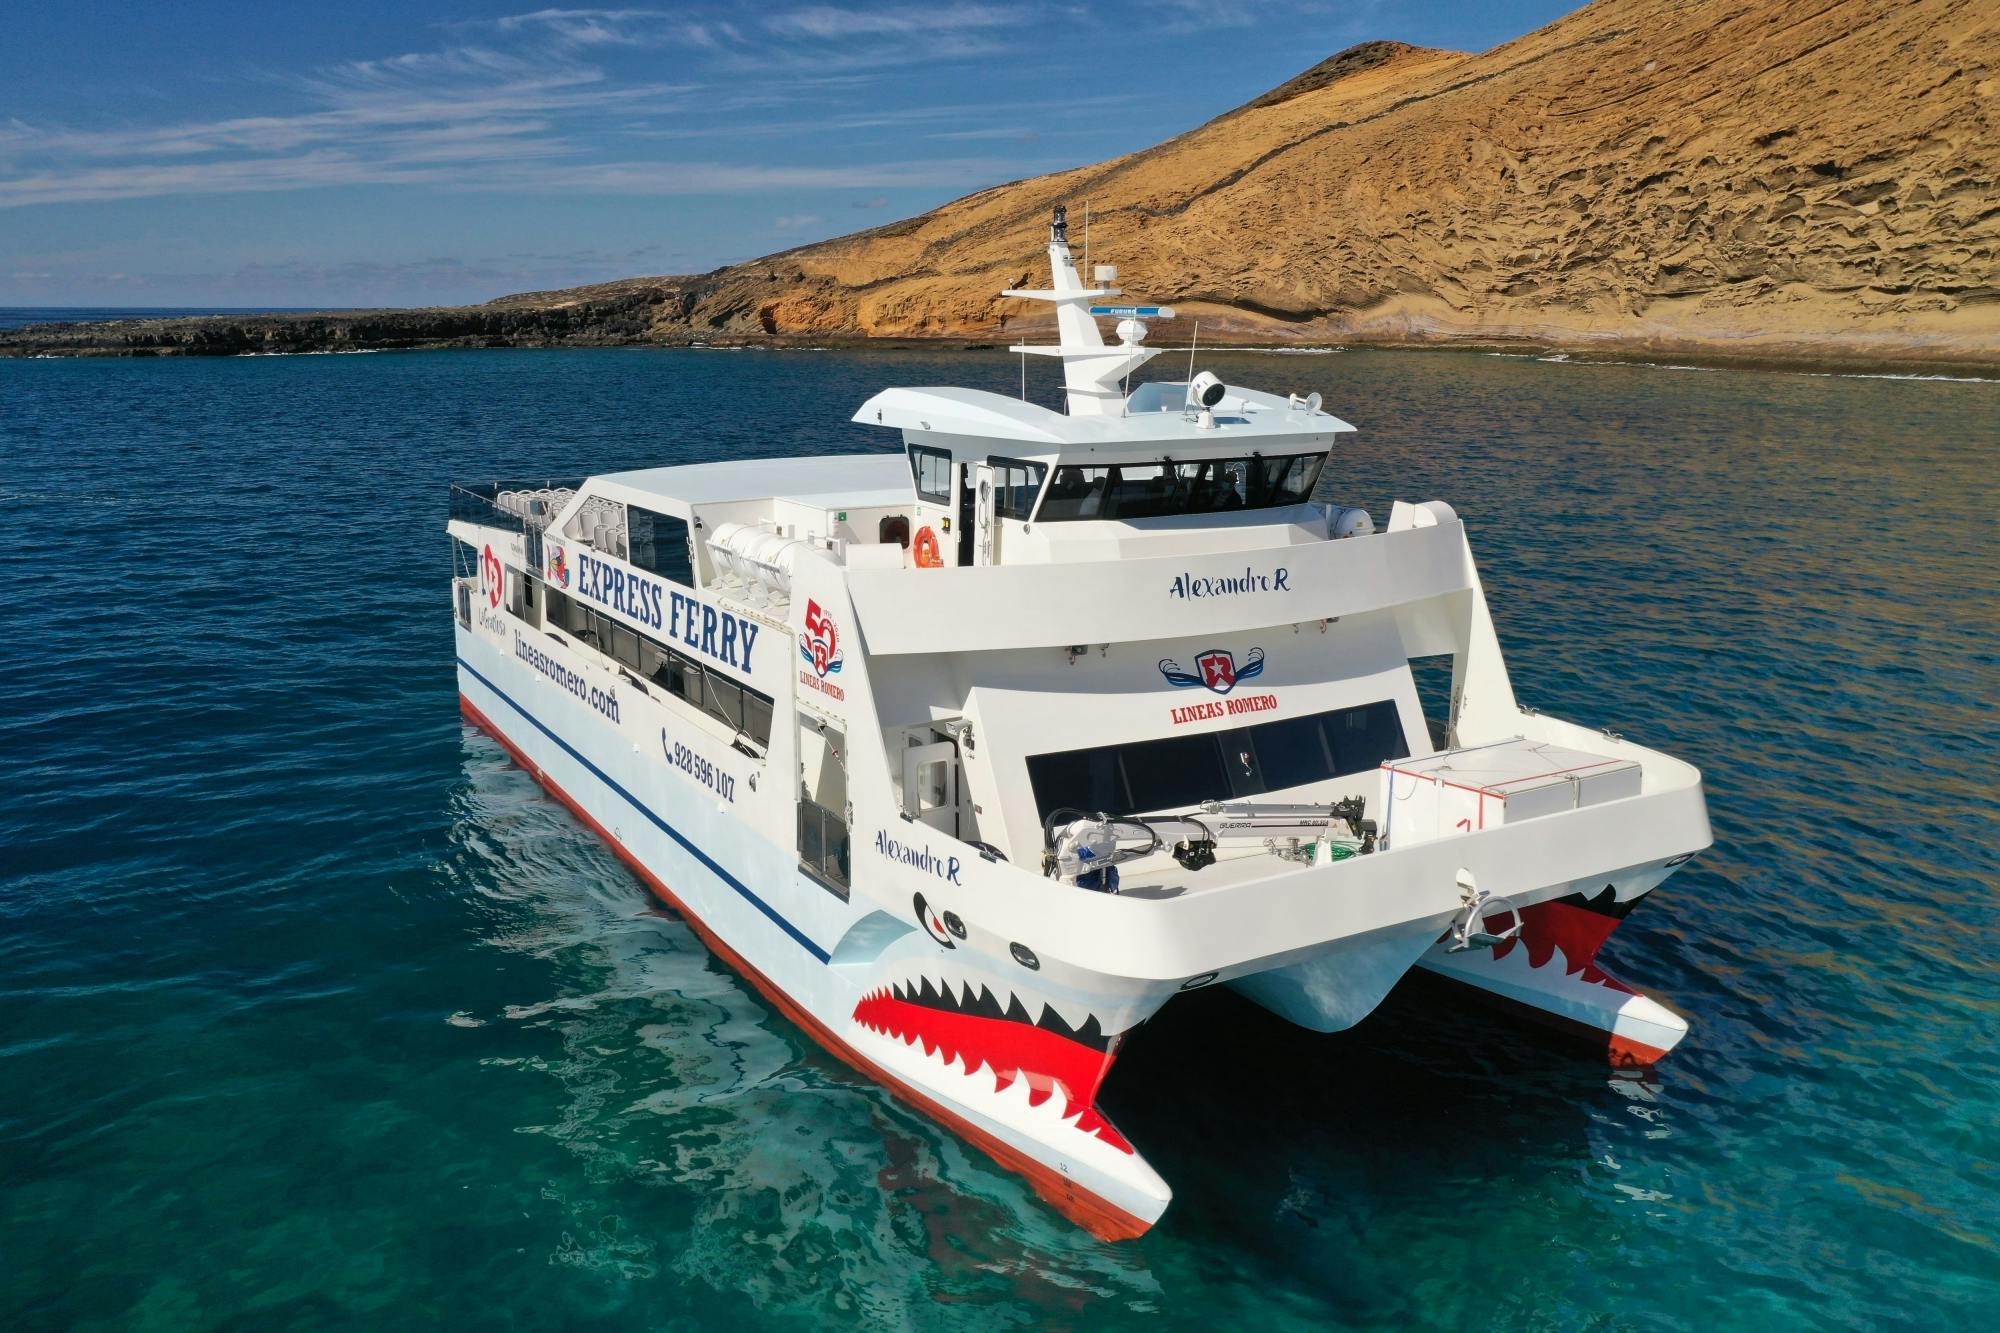 Ferry to La Graciosa Island from Orzola